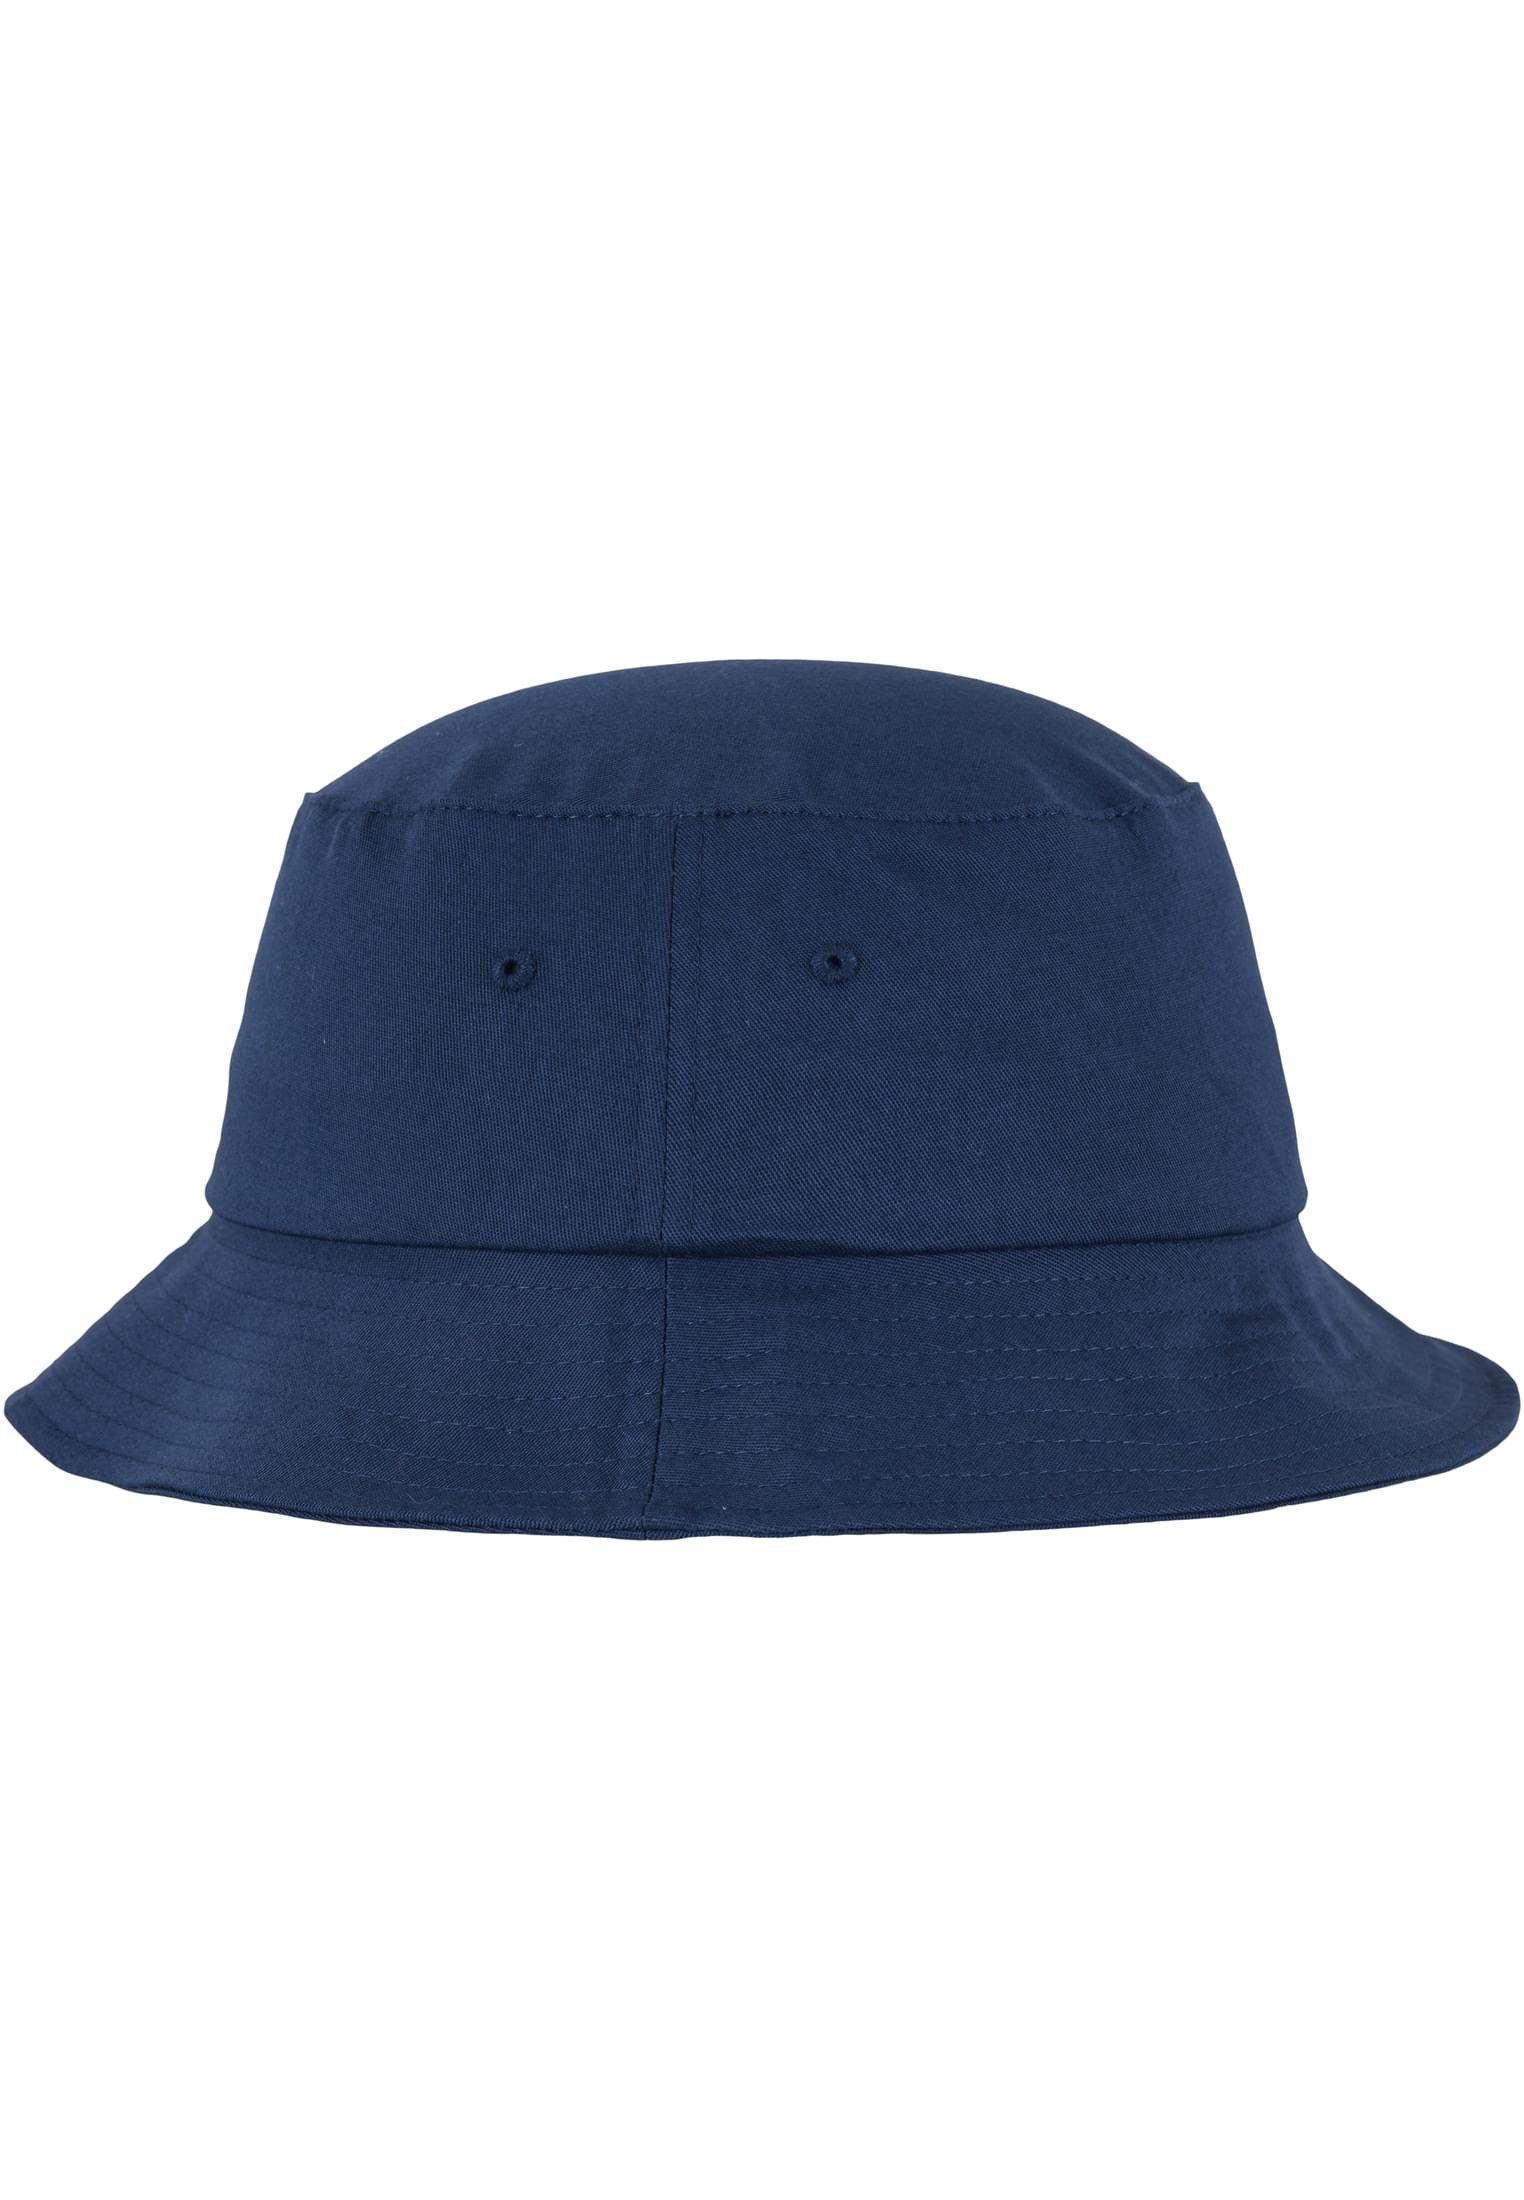 Flexfit Flex Cap Accessoires Flexfit Bucket navy Twill Hat Cotton